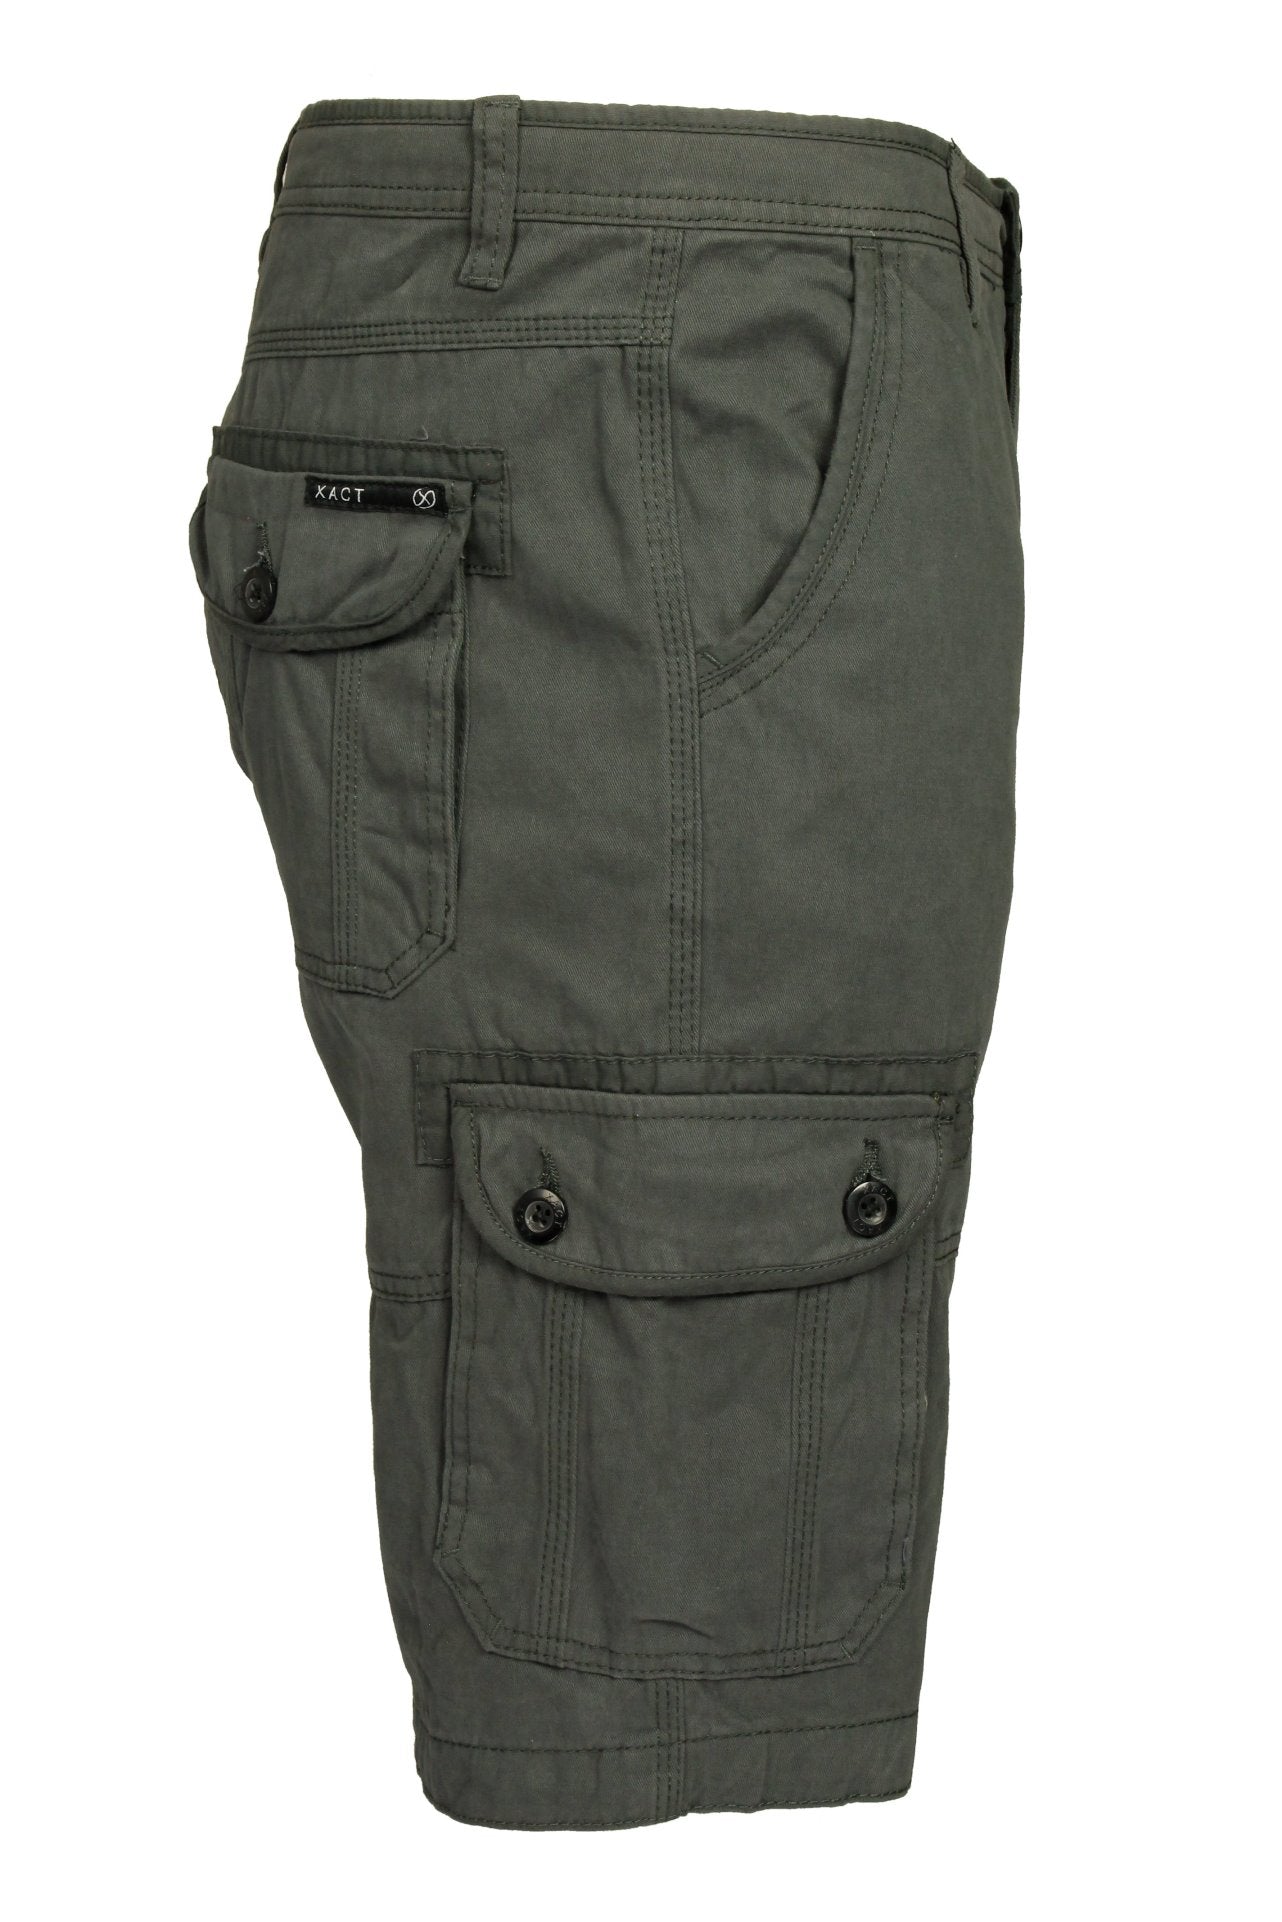 Mens Xact Cotton Twill Cargo Shorts-4